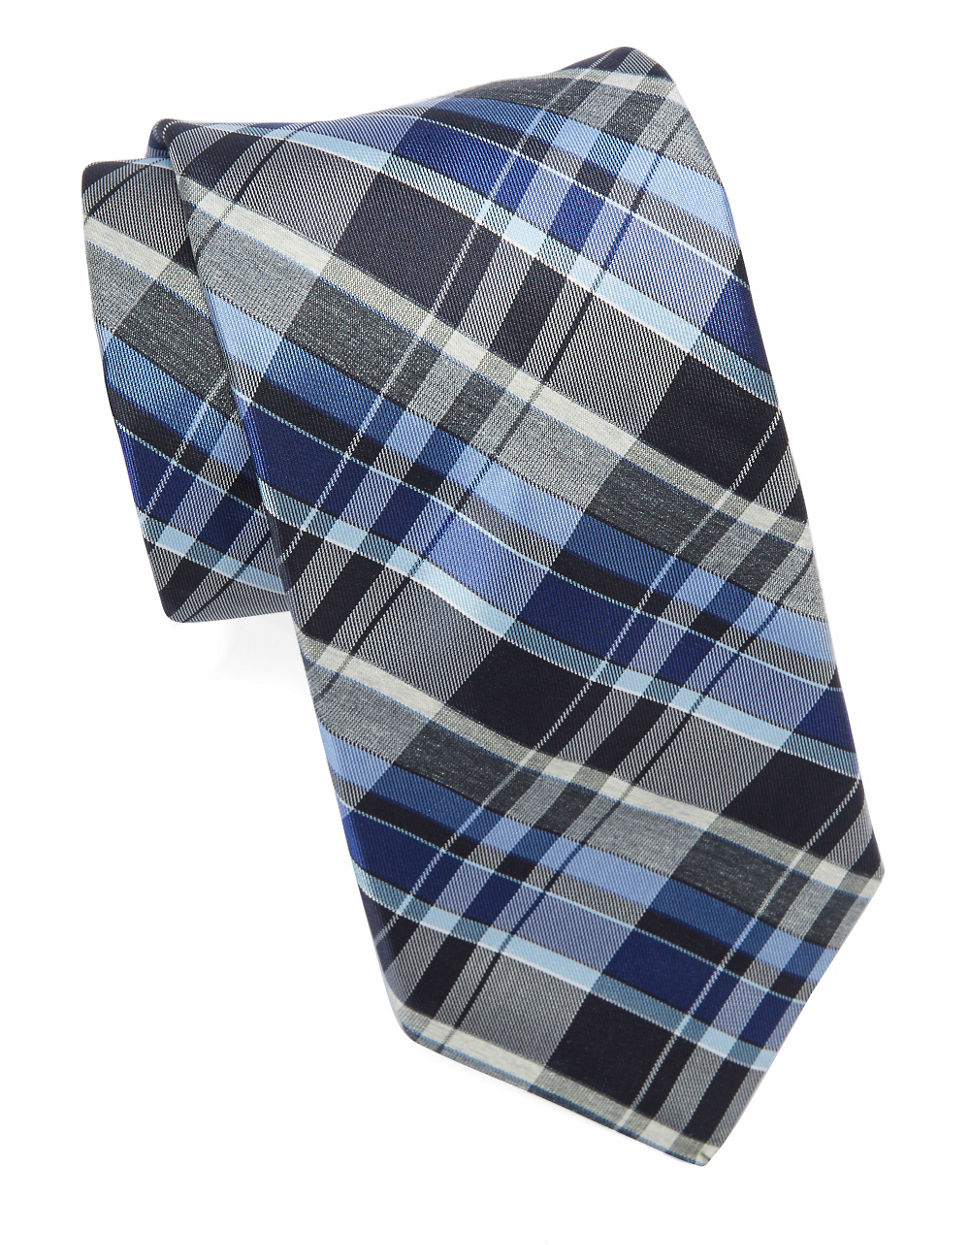 Lyst - Michael Kors Silk Plaid Tie in Blue for Men